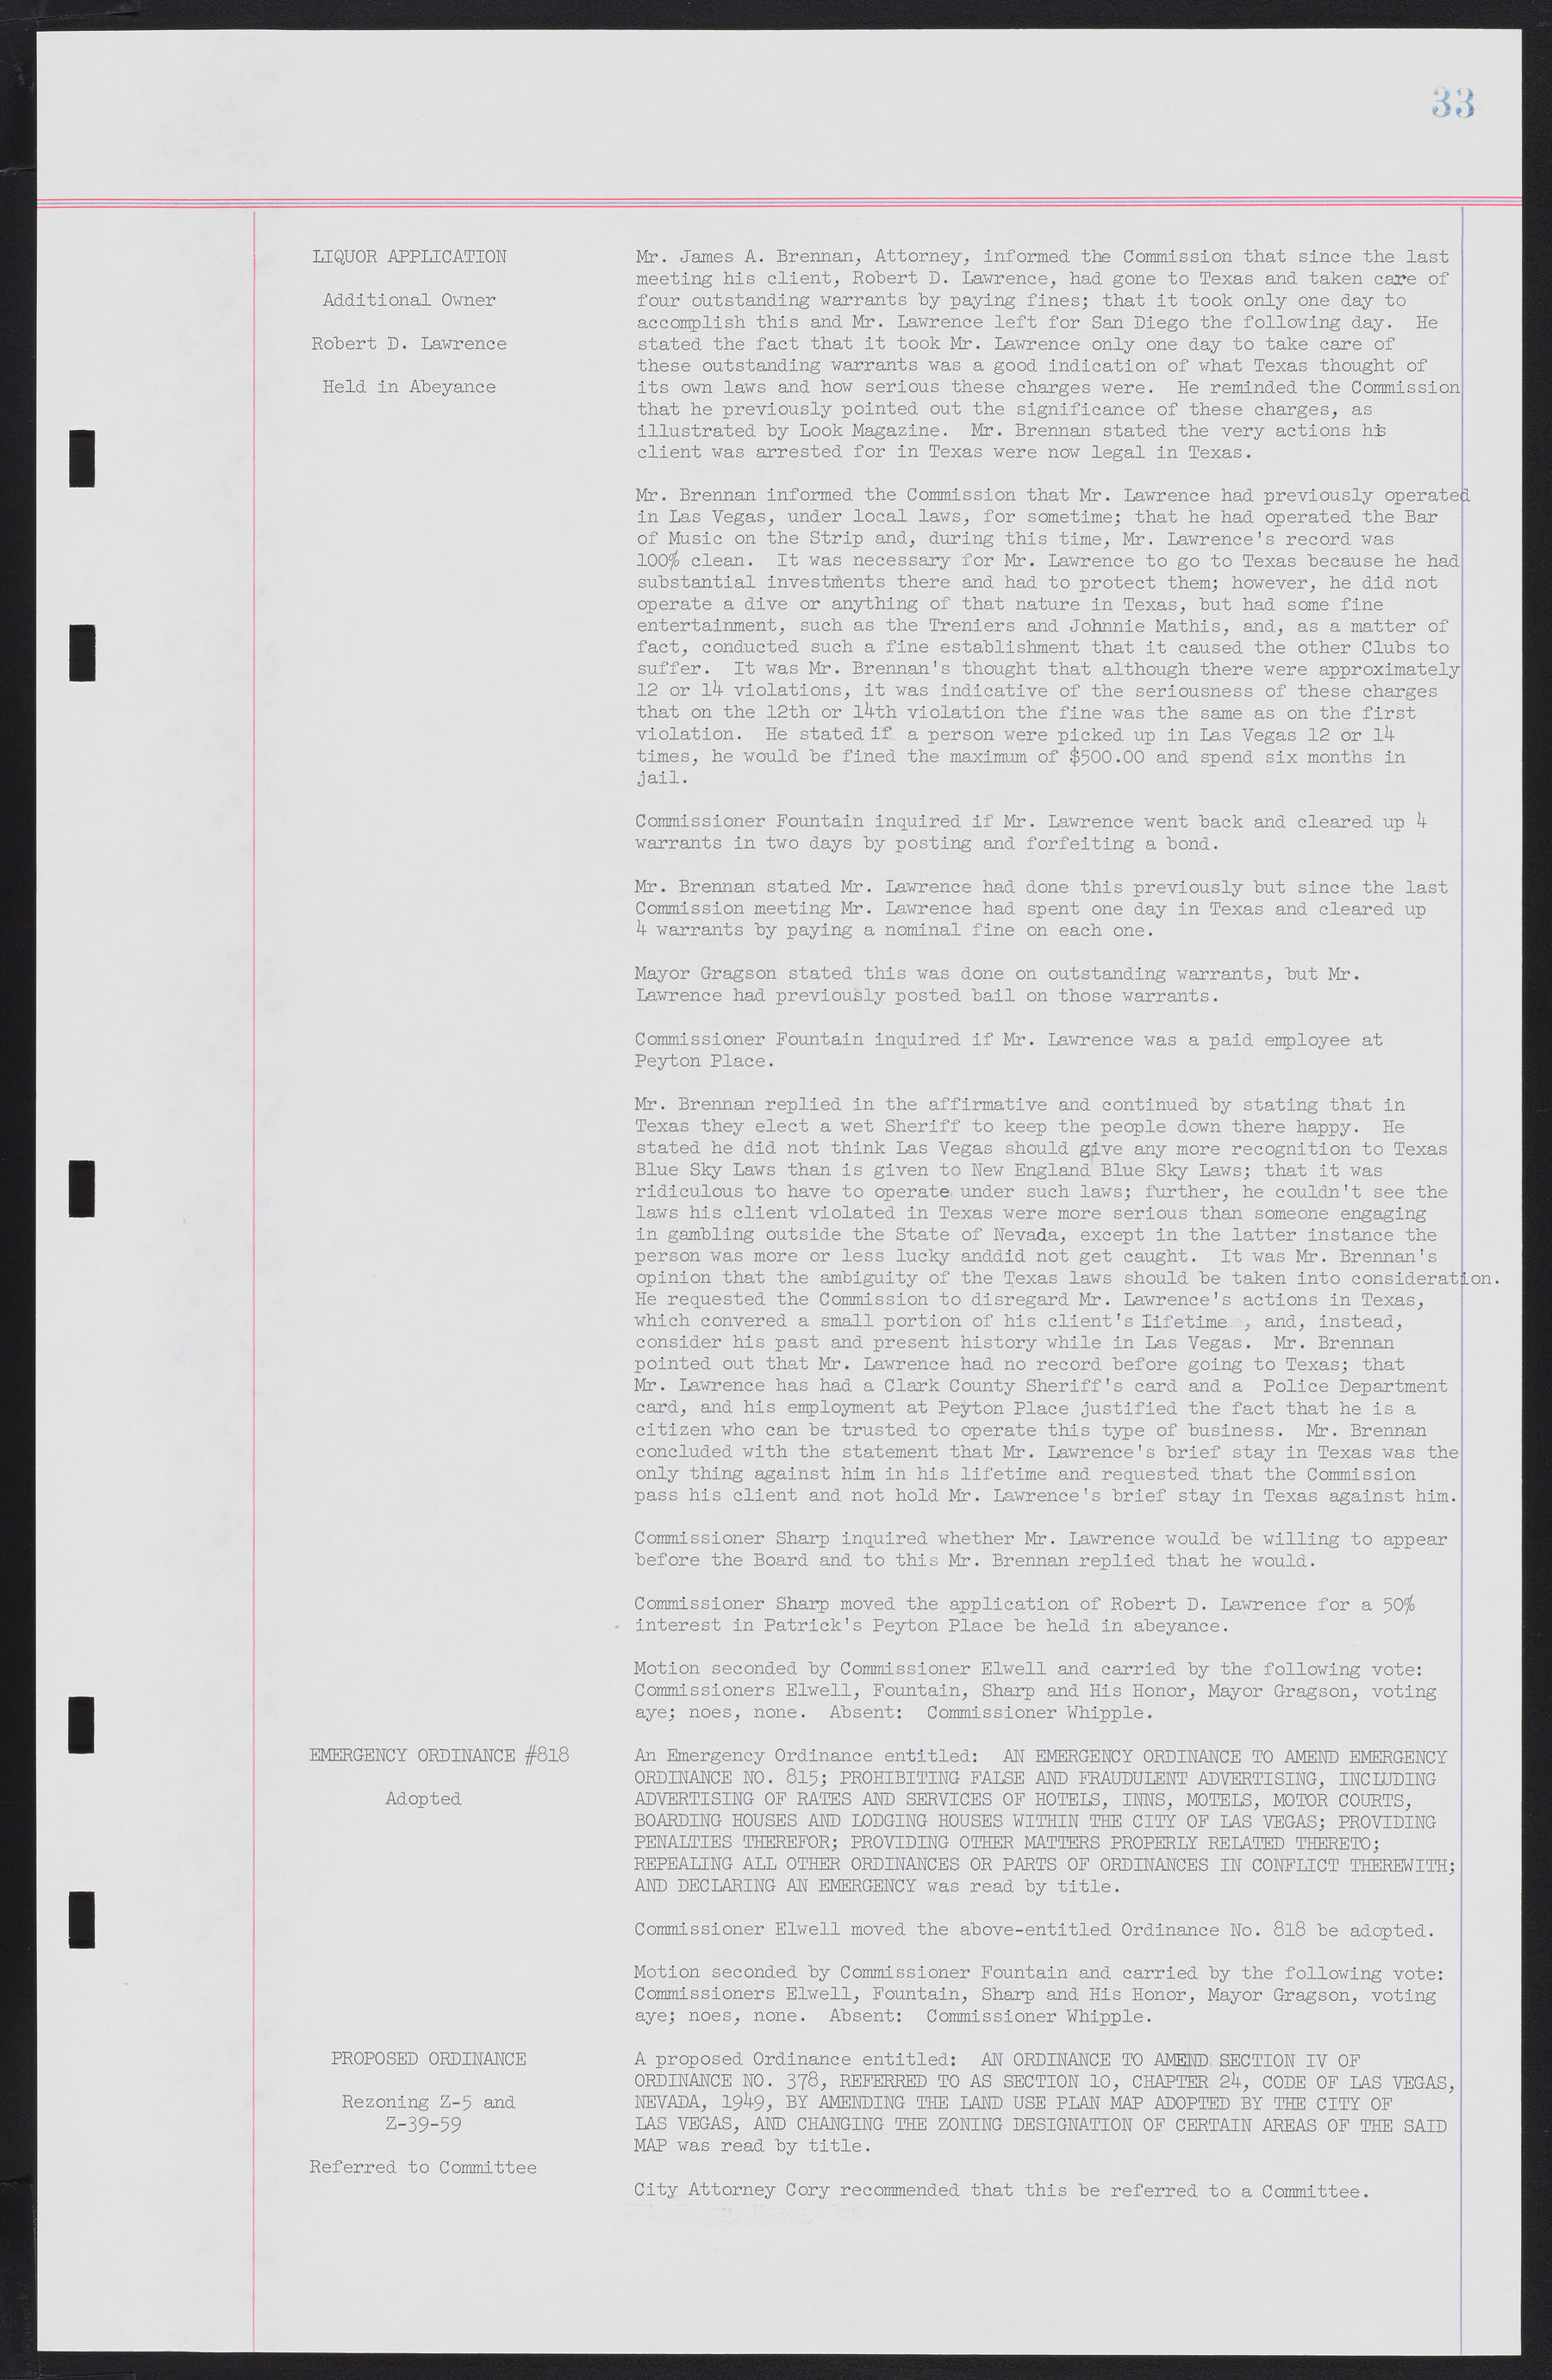 Las Vegas City Commission Minutes, December 8, 1959 to February 17, 1960, lvc000012-37